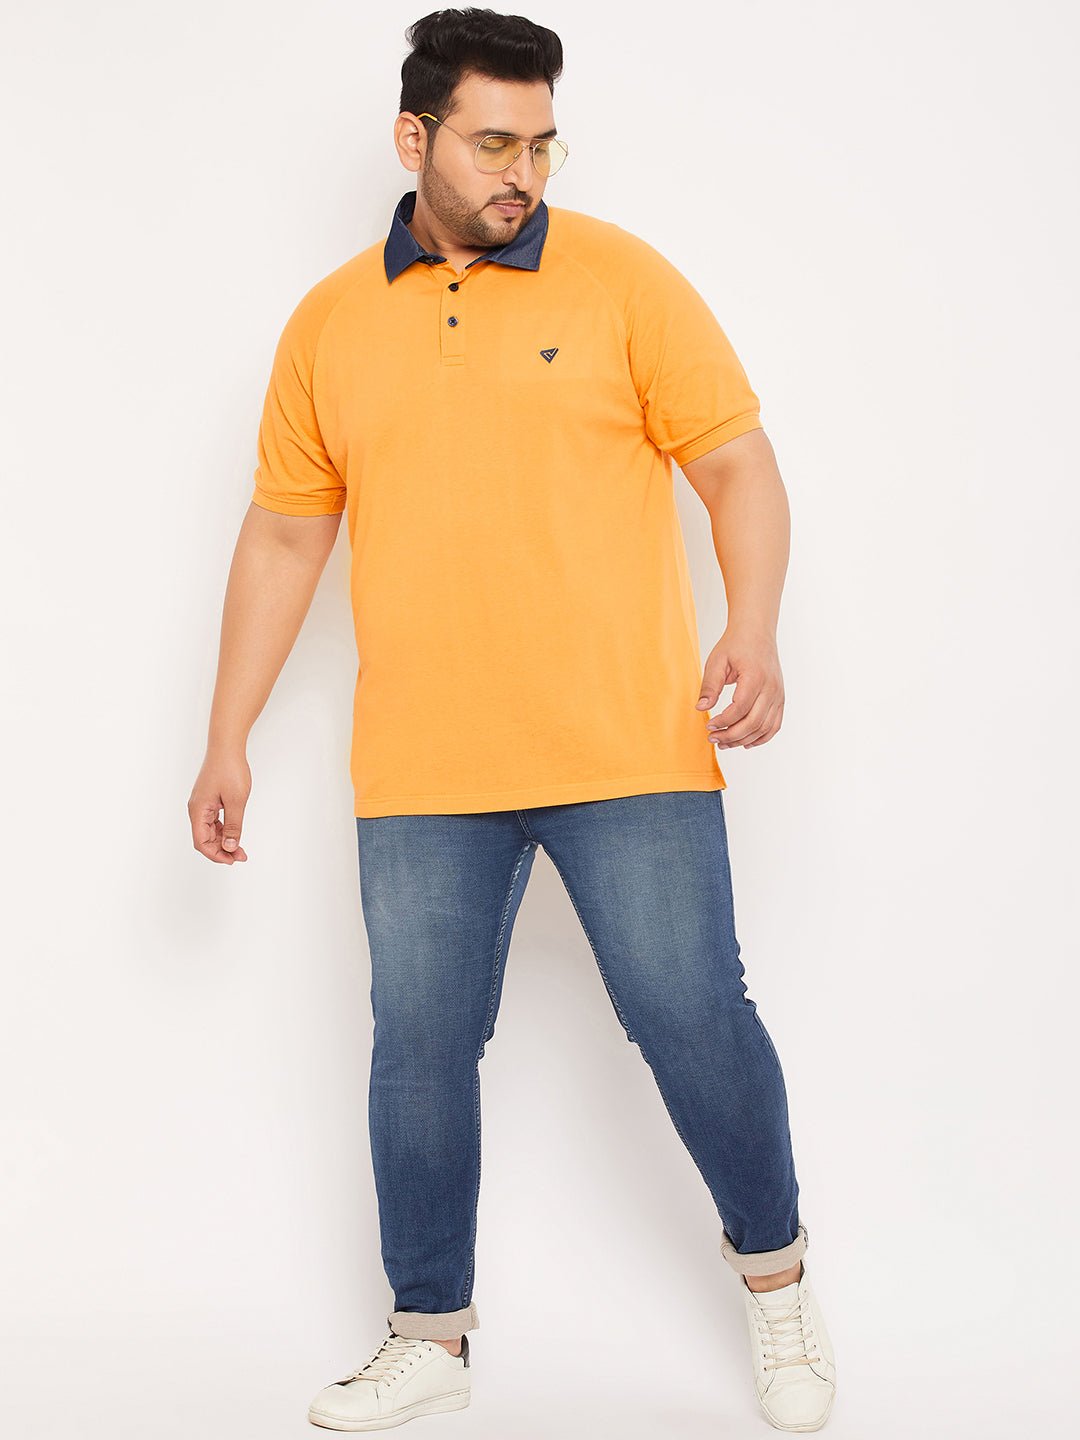 Plus Size Mustard Polo T-Shirt - clubyork